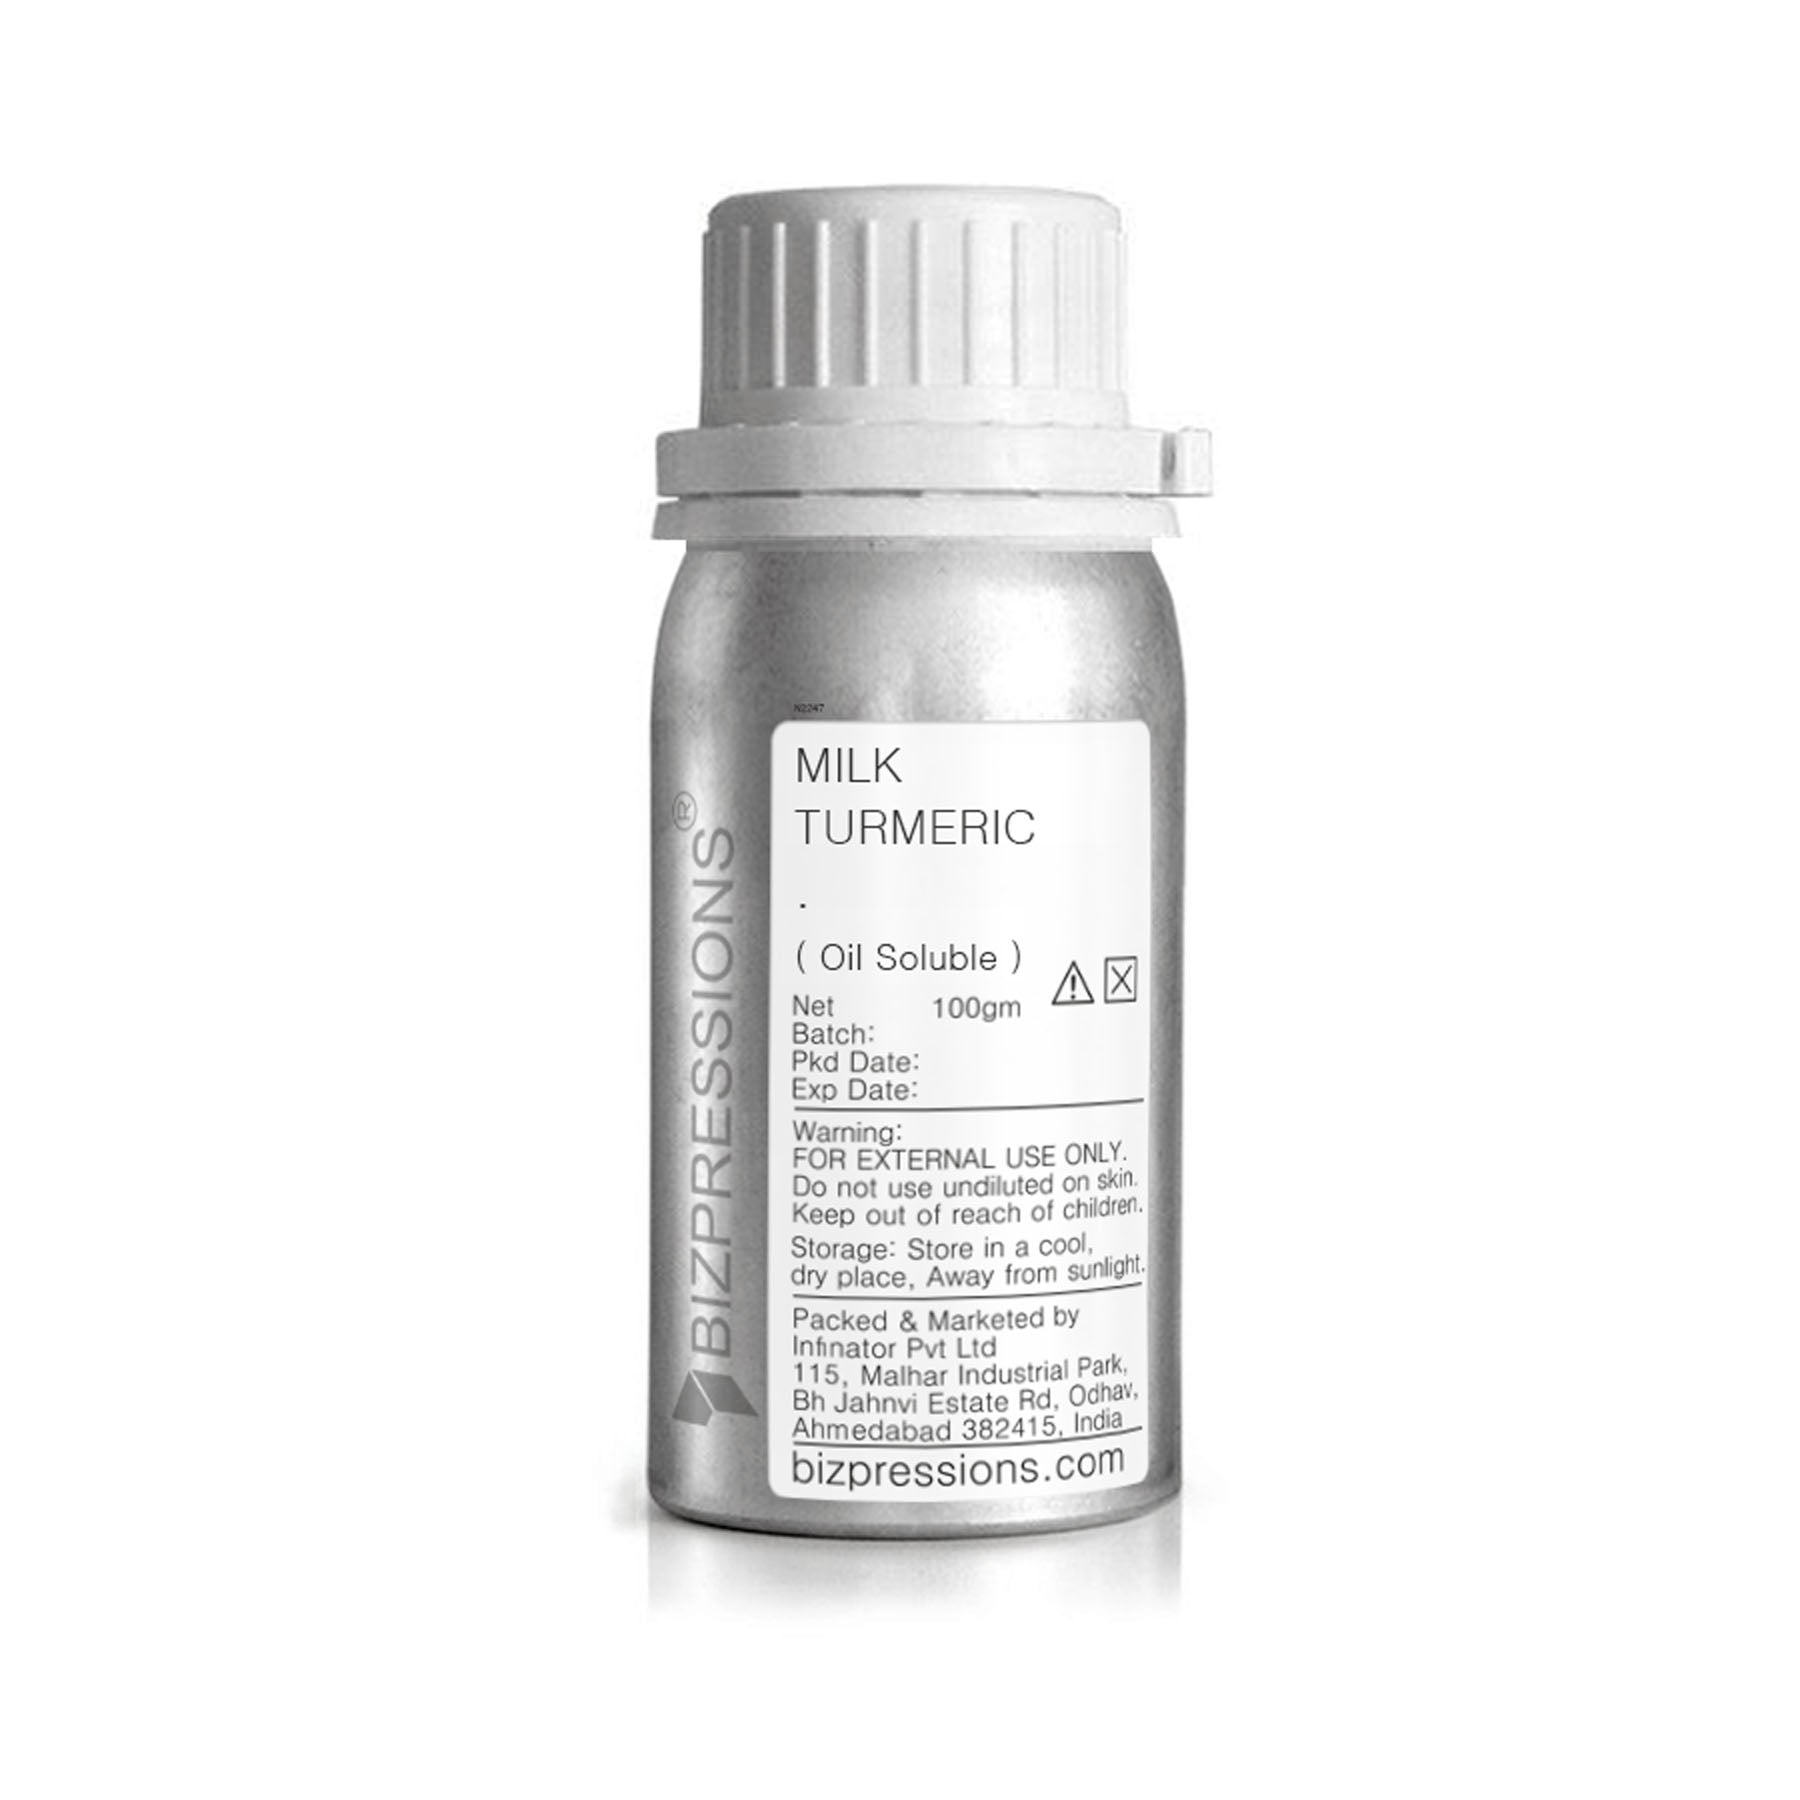 MILK TURMERIC - Fragrance ( Oil Soluble ) - 100 gm